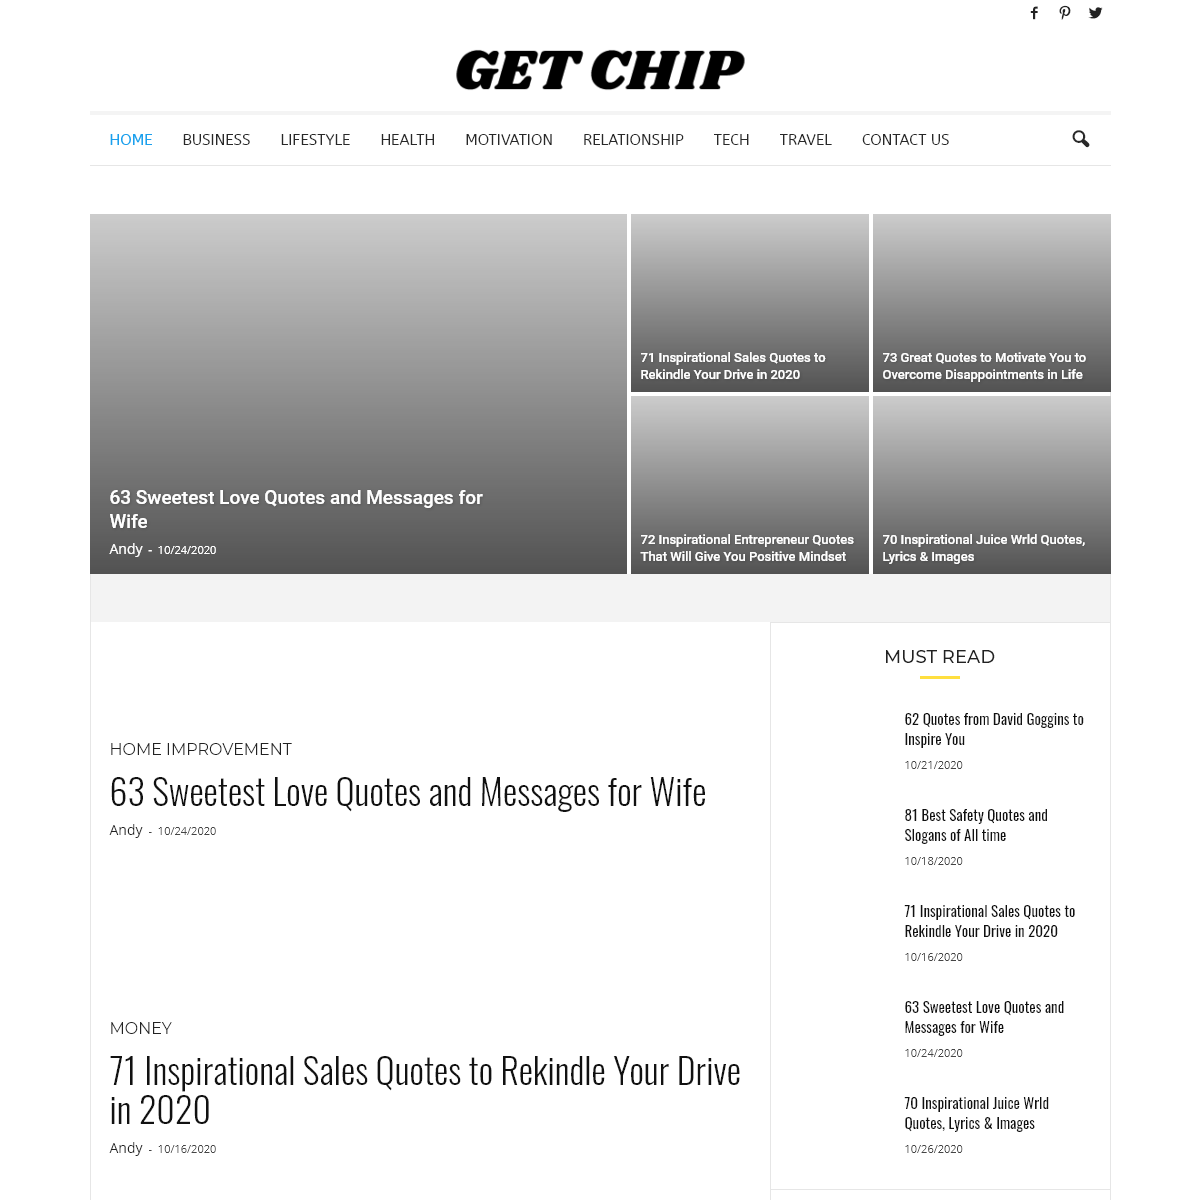 A complete backup of getchip.com